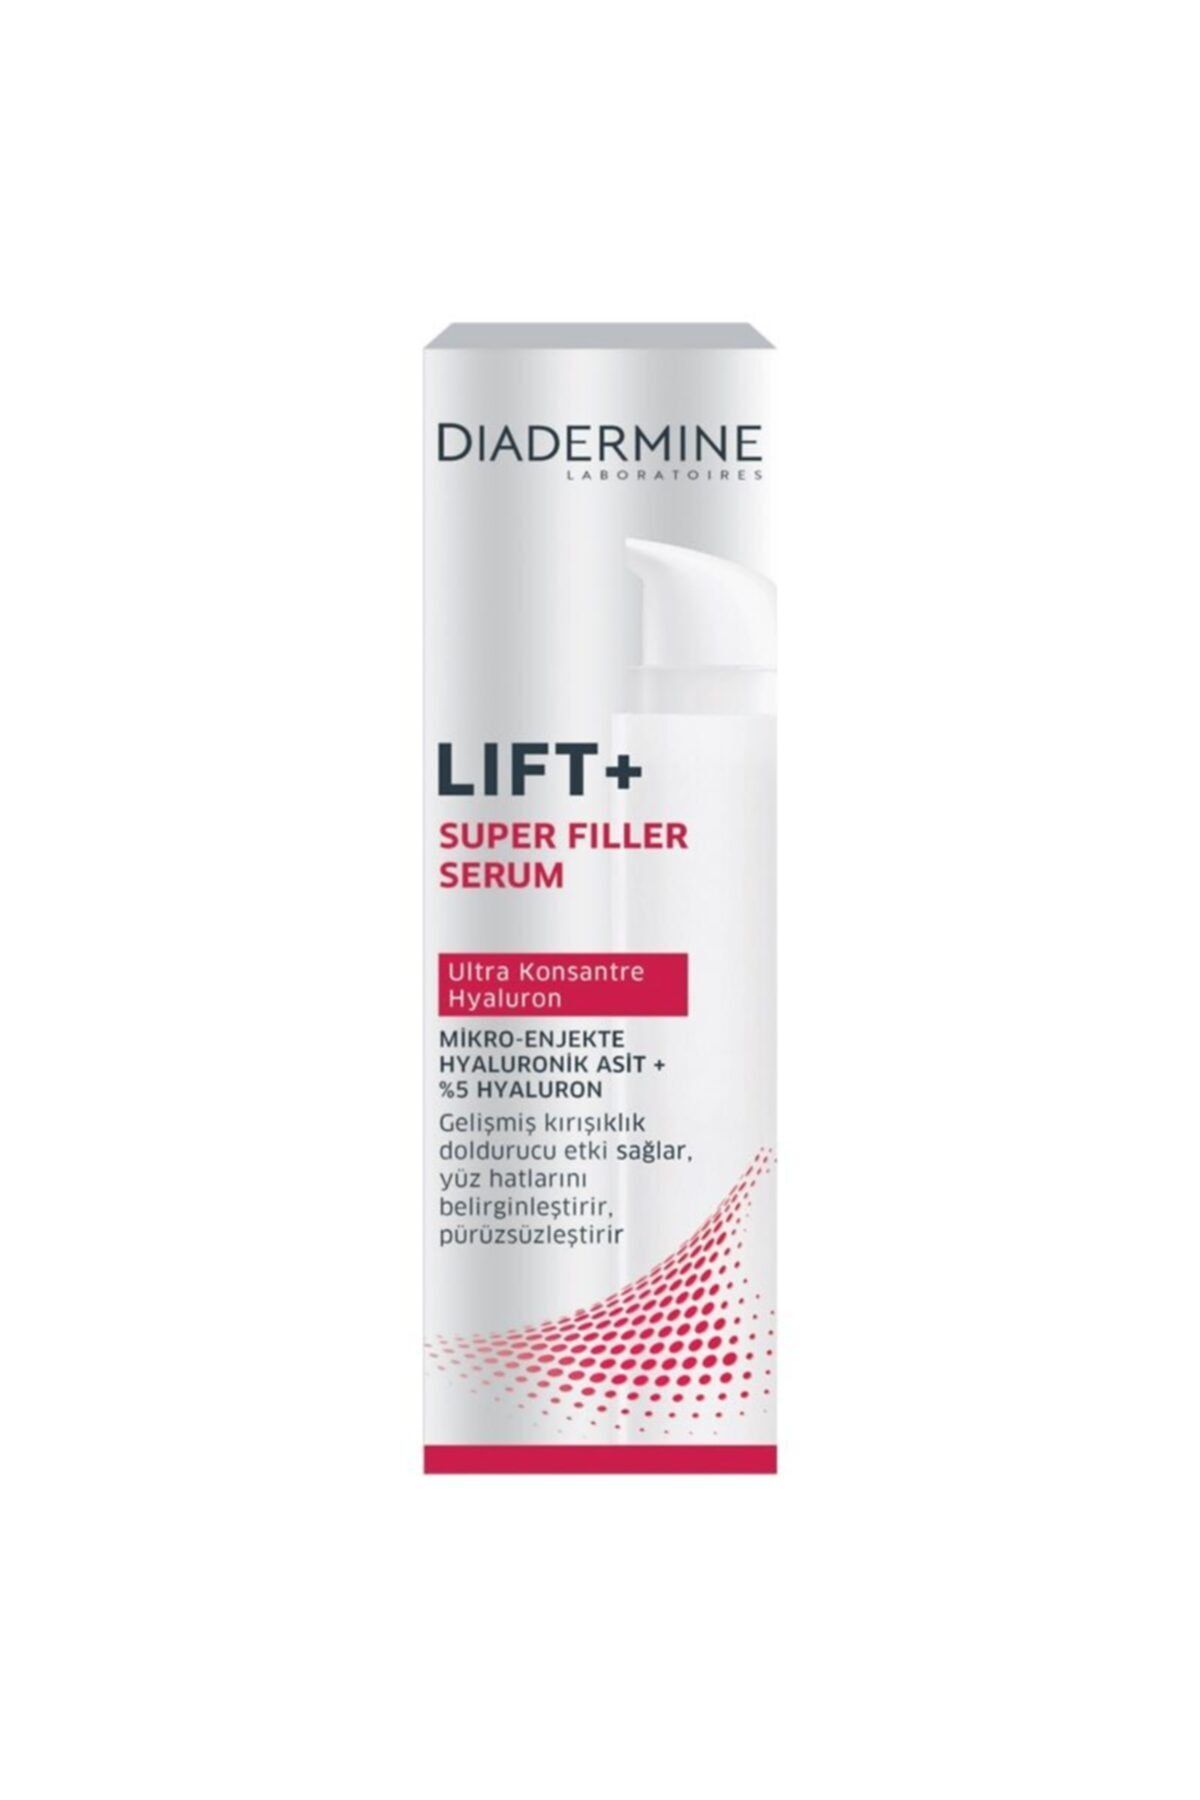 Diadermine Lift+ Super Filler Serum 40 ml 98744545646546